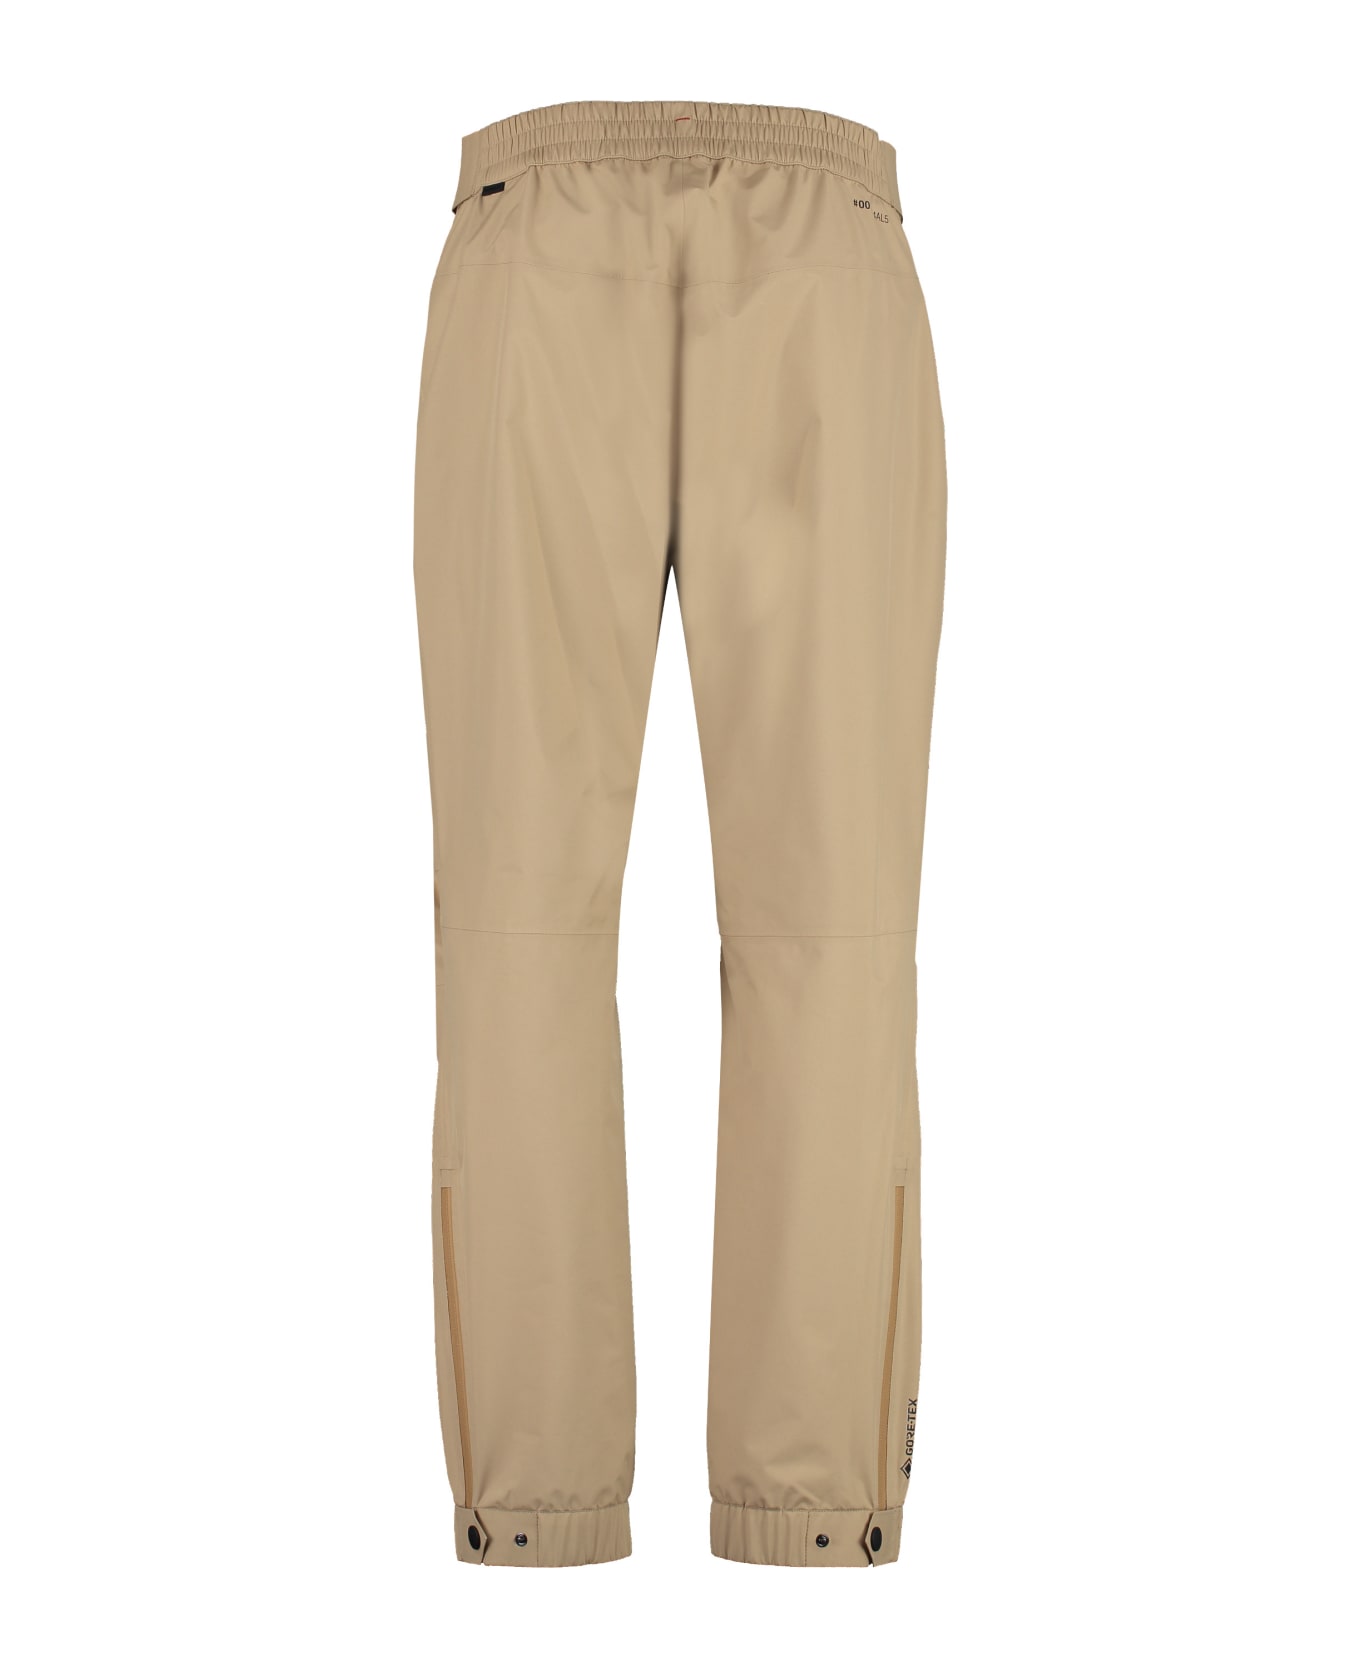 Moncler Grenoble Technical Fabric Pants - Beige